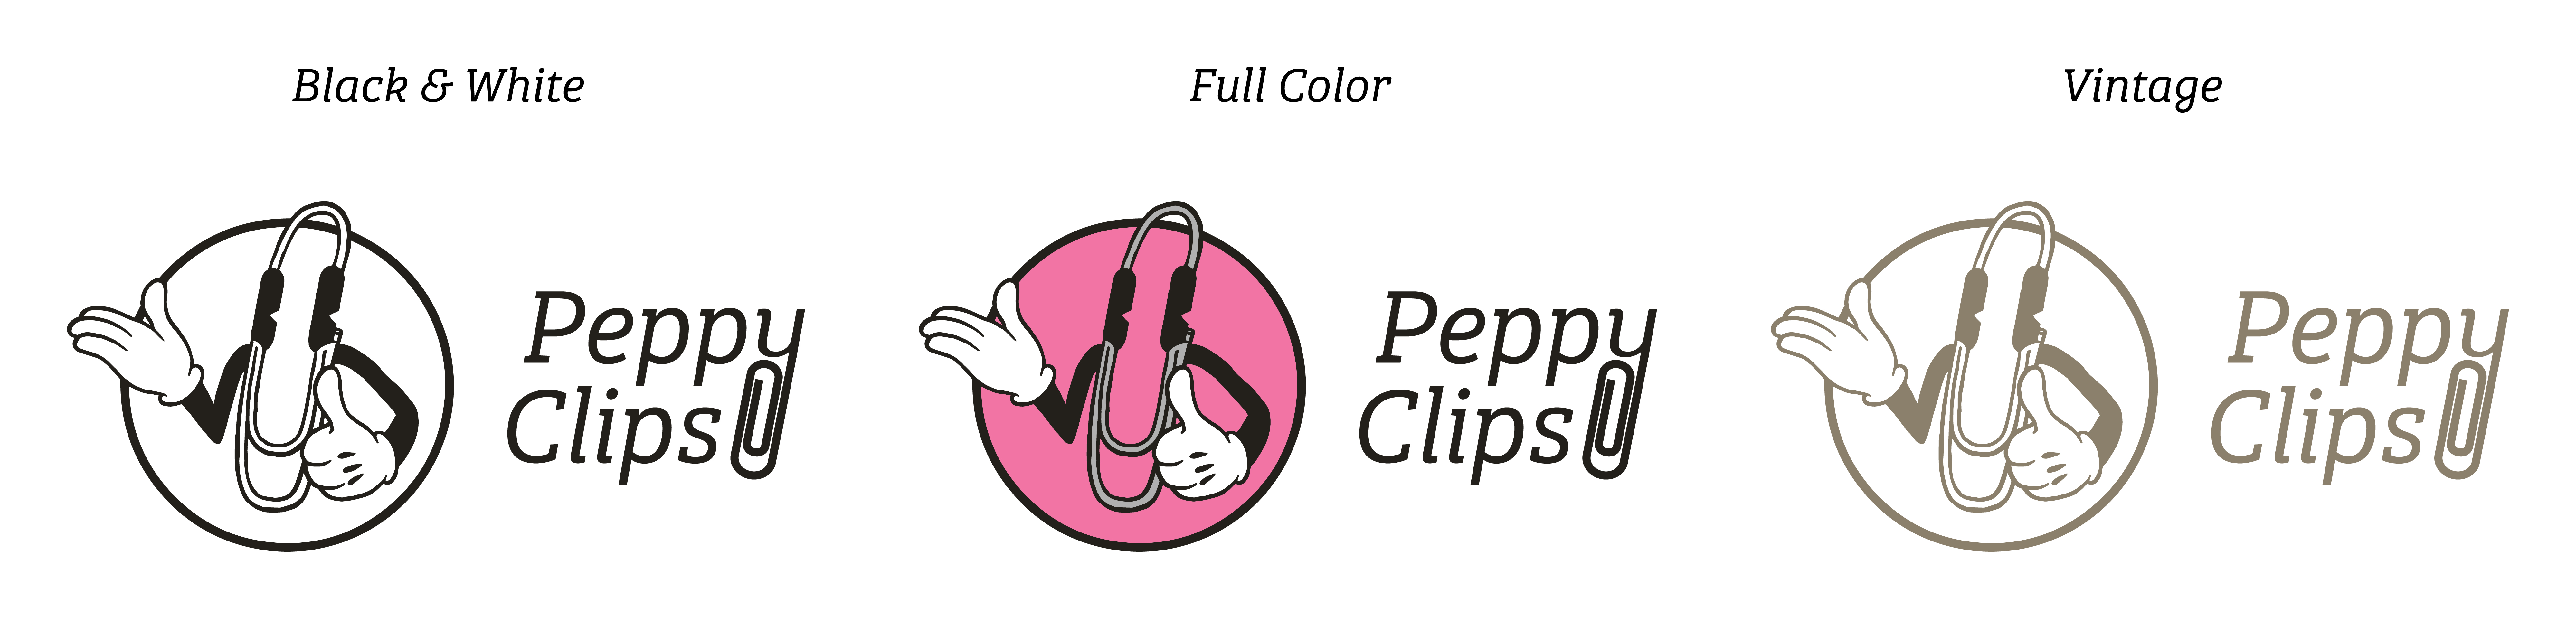 Peppy Clips revised logo sheet